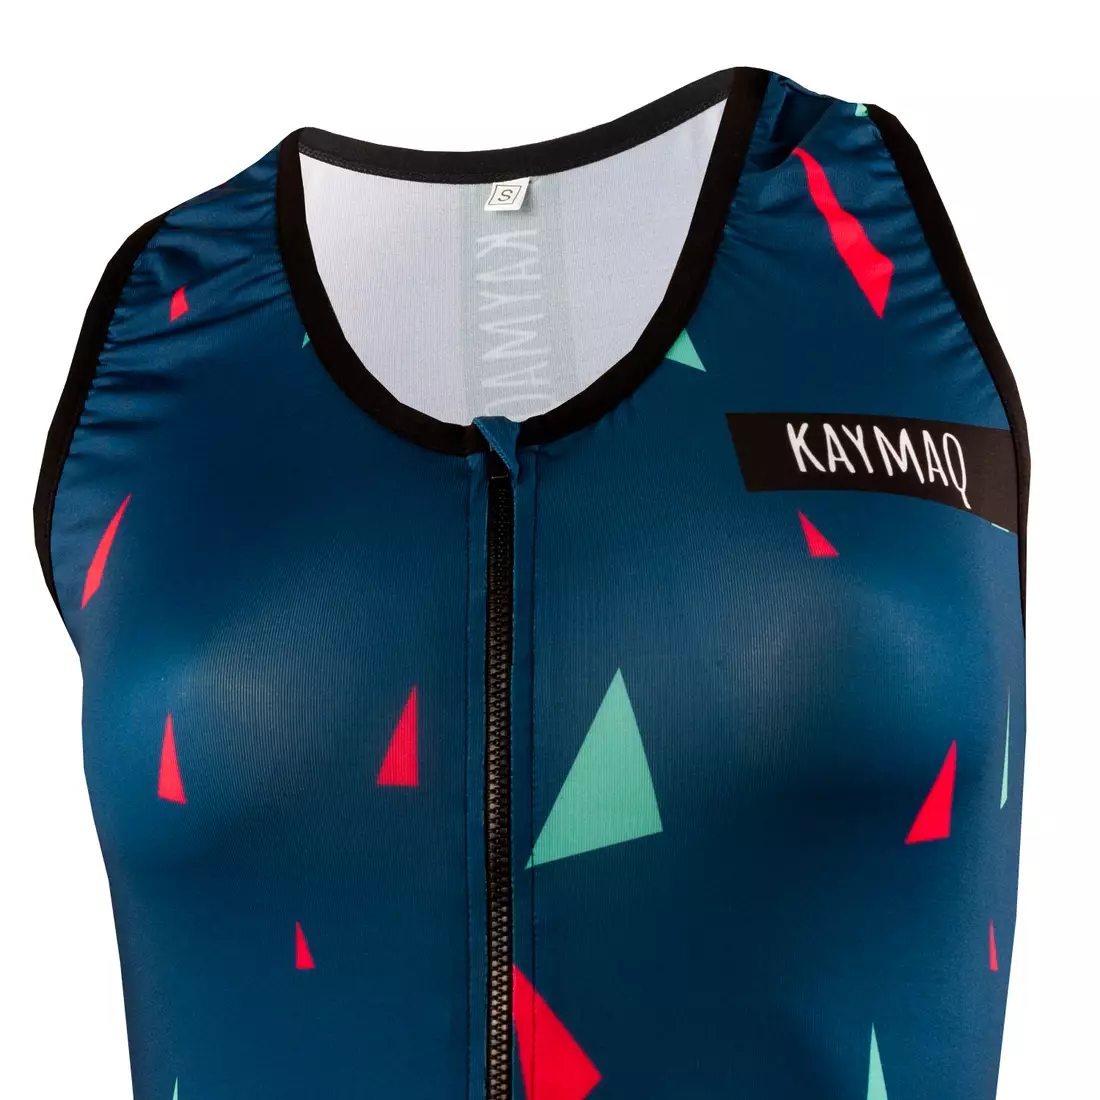 KAYMAQ DESIGN W1-W41 ärmelloses Fahrrad-T-Shirt für Frauen